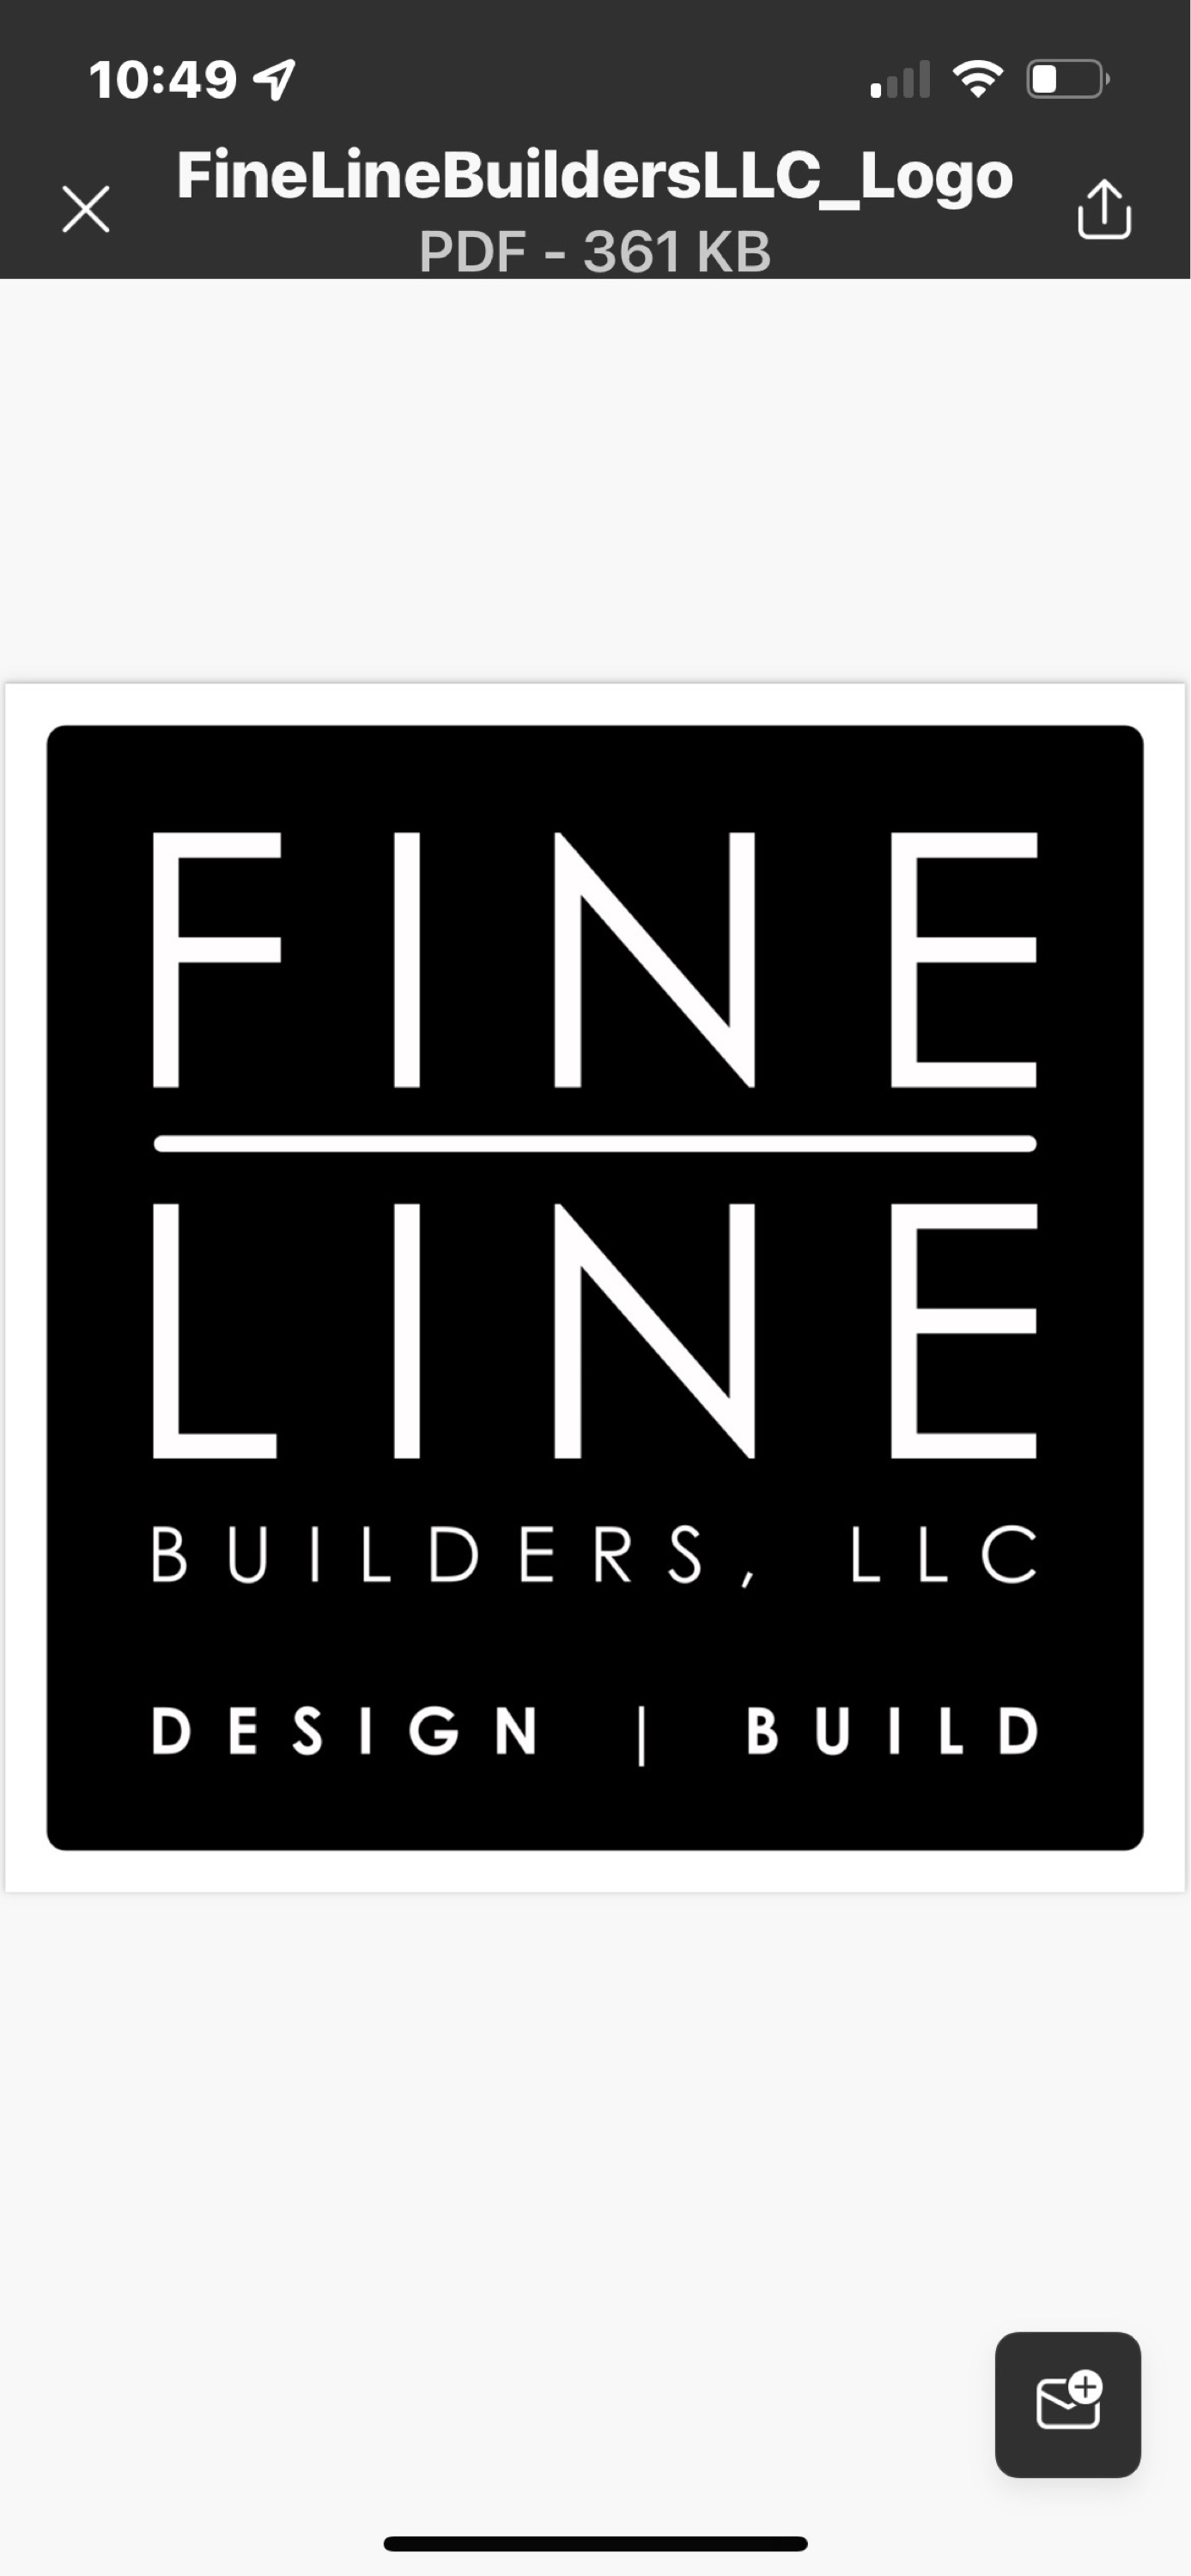 Fine Line Builders LLC Logo